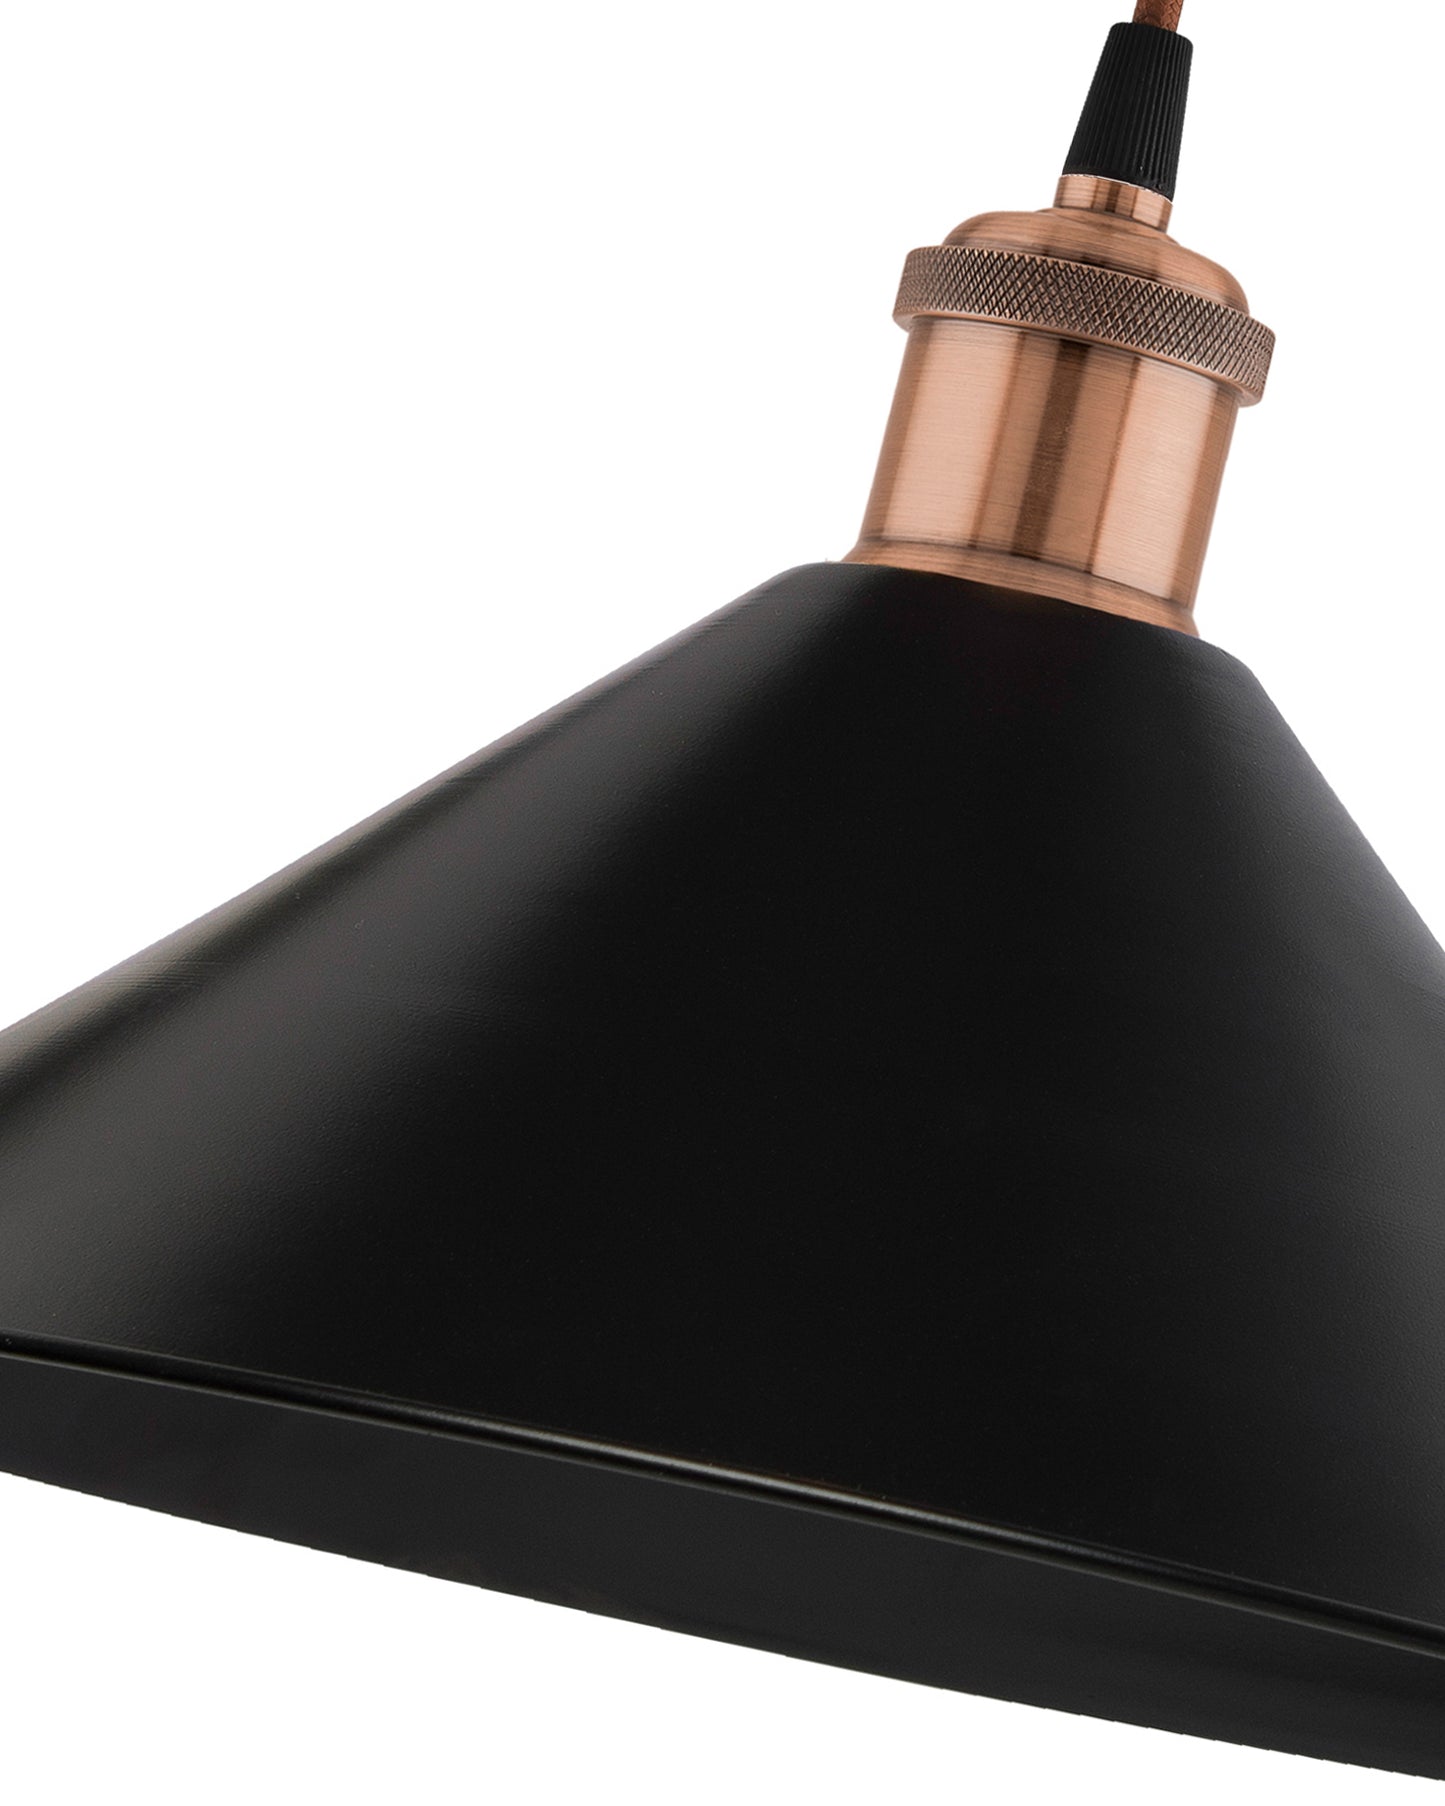 Edison Wall Black Barn Cone Shade Lamp, Vintage Industrial Loft, E27 Holder, Decorative, Swing Wall Light